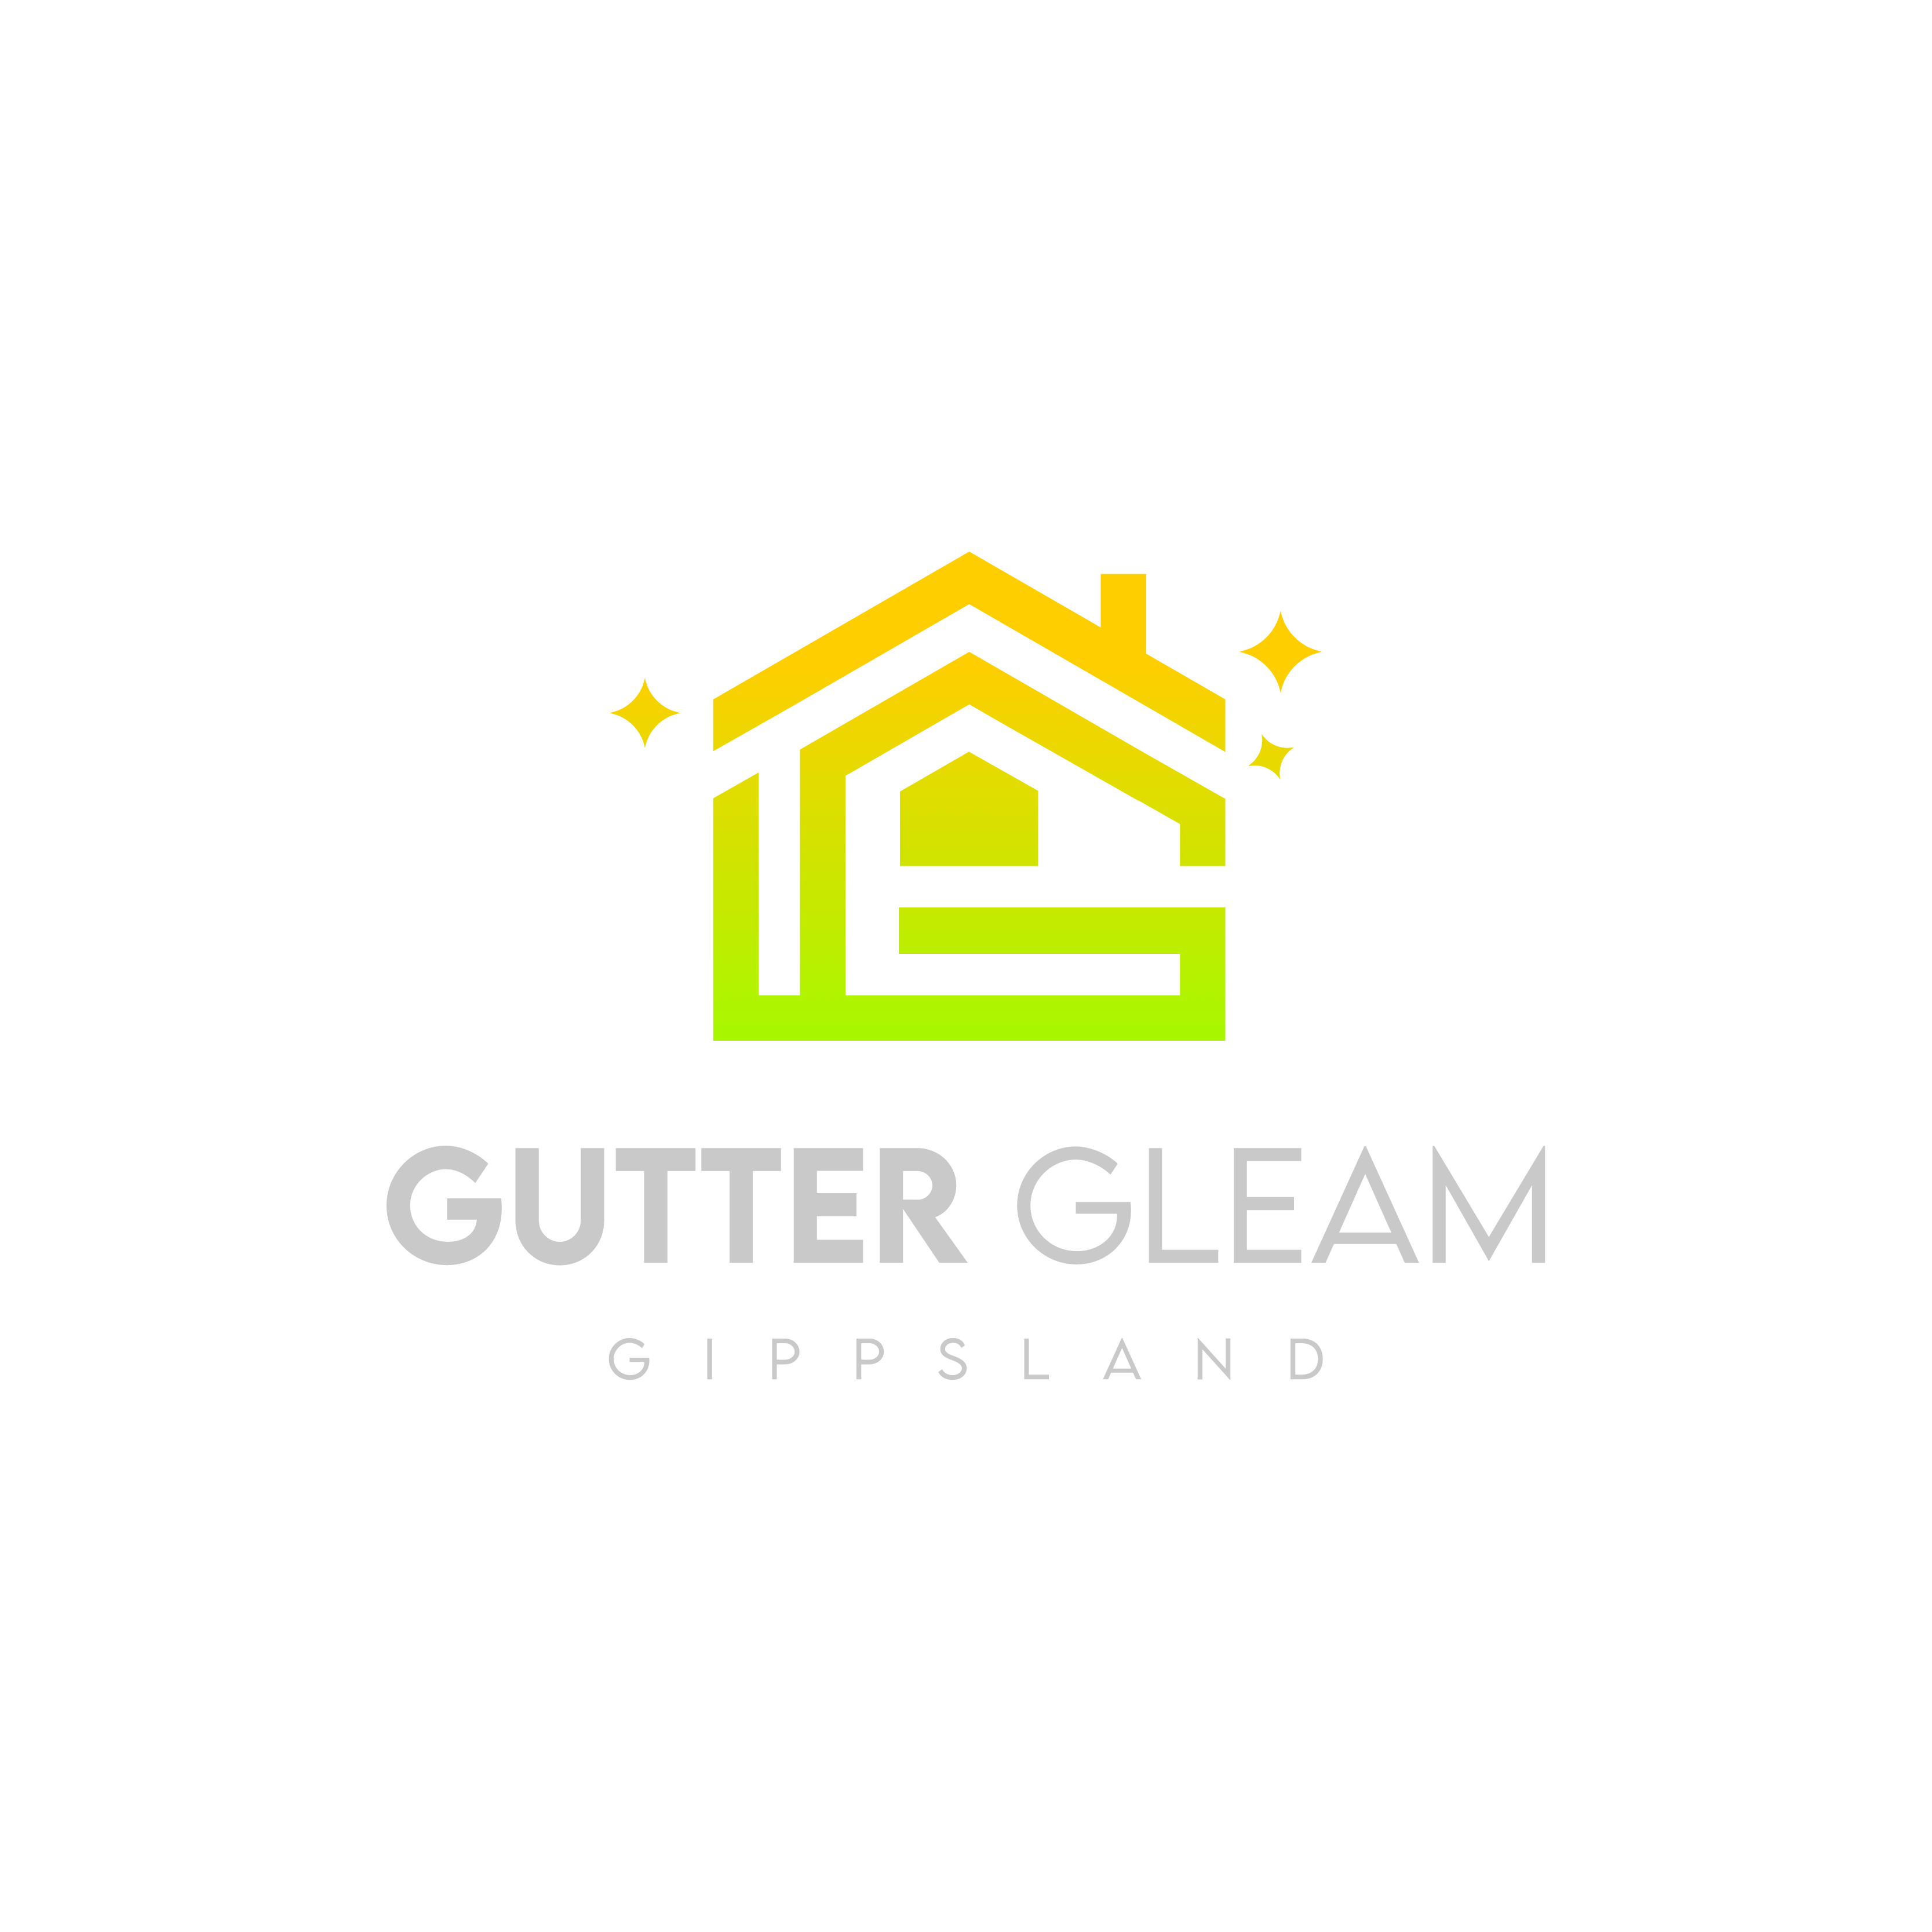 Gutter Gleam Gippsland vertical logo transparent background